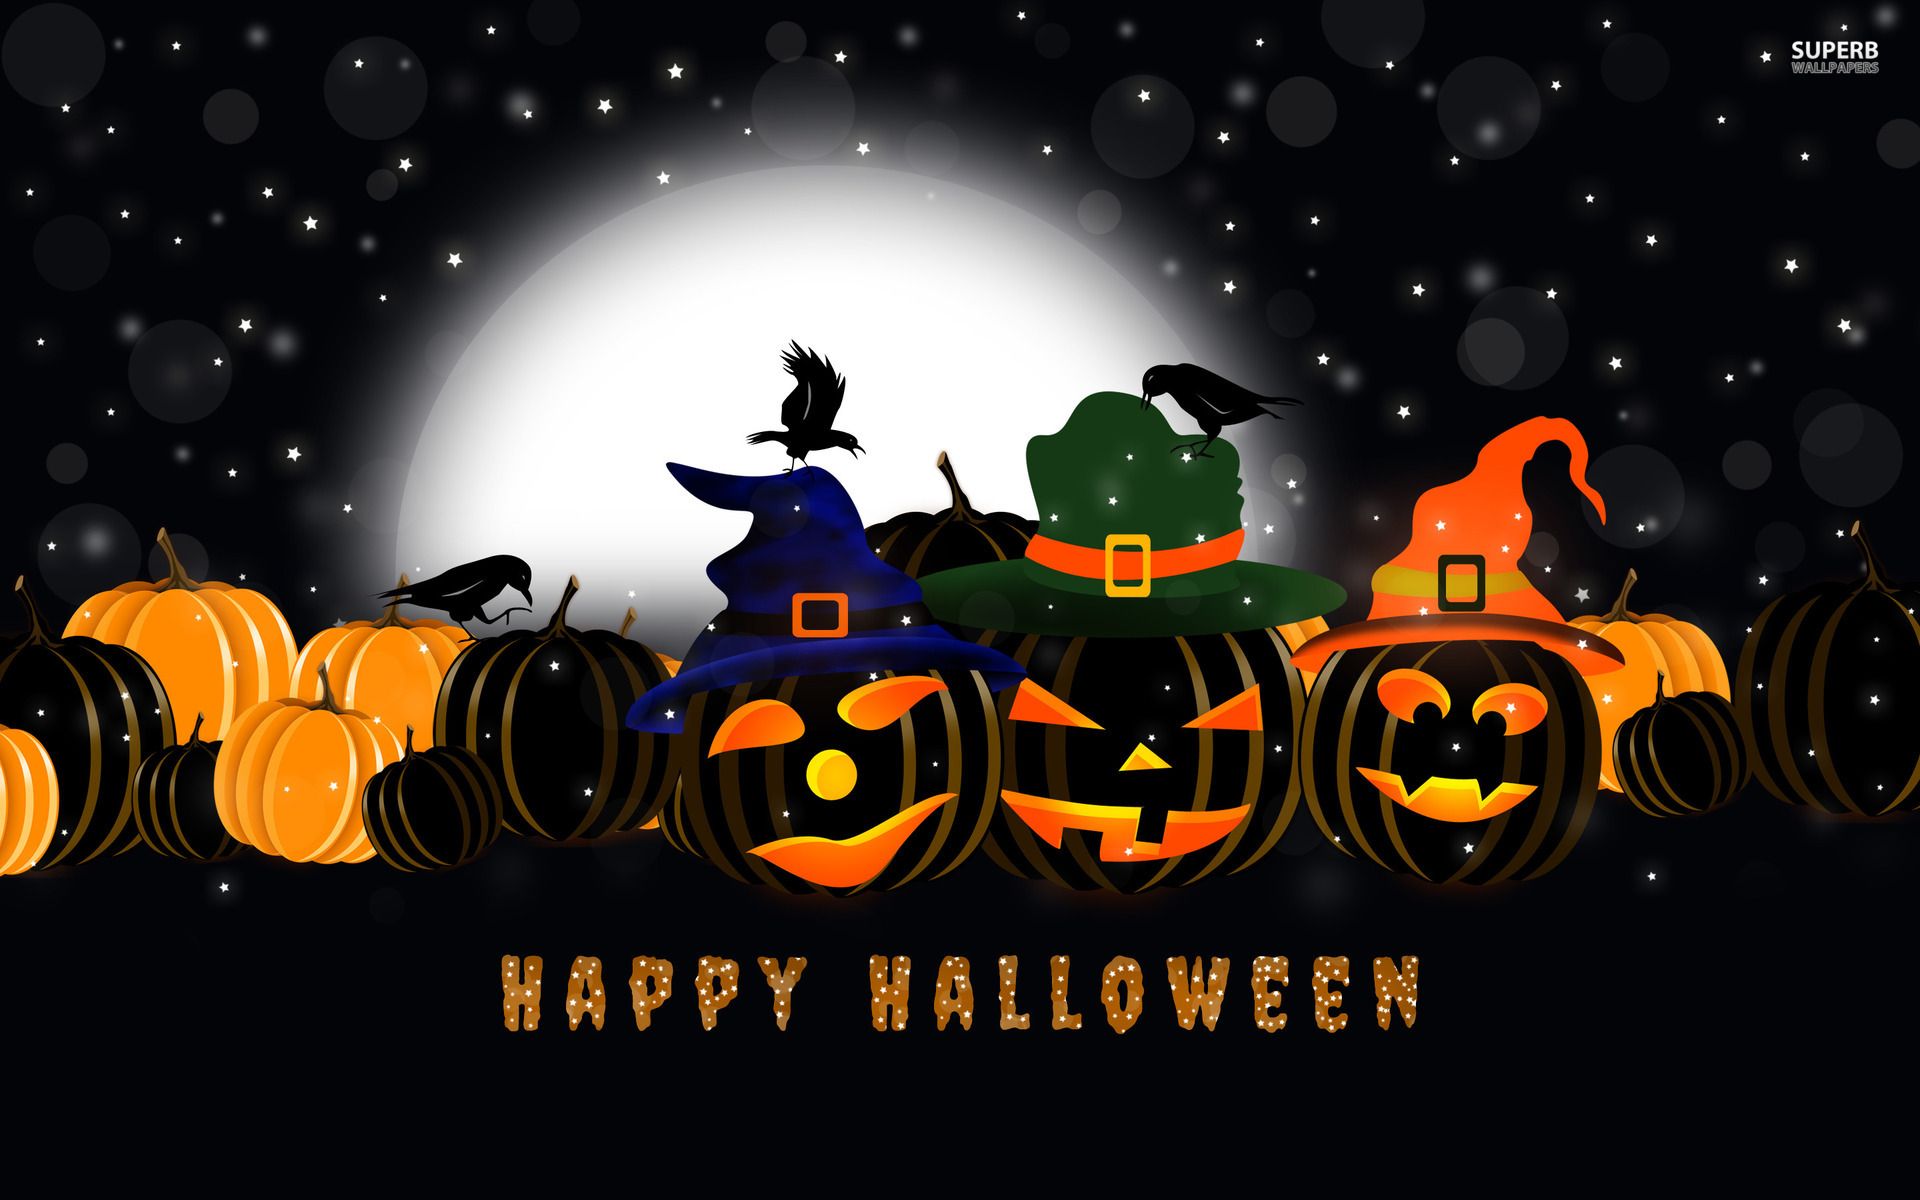 Download Happy Halloween Wallpaper for free. Happy halloween picture, Halloween wishes, Halloween image